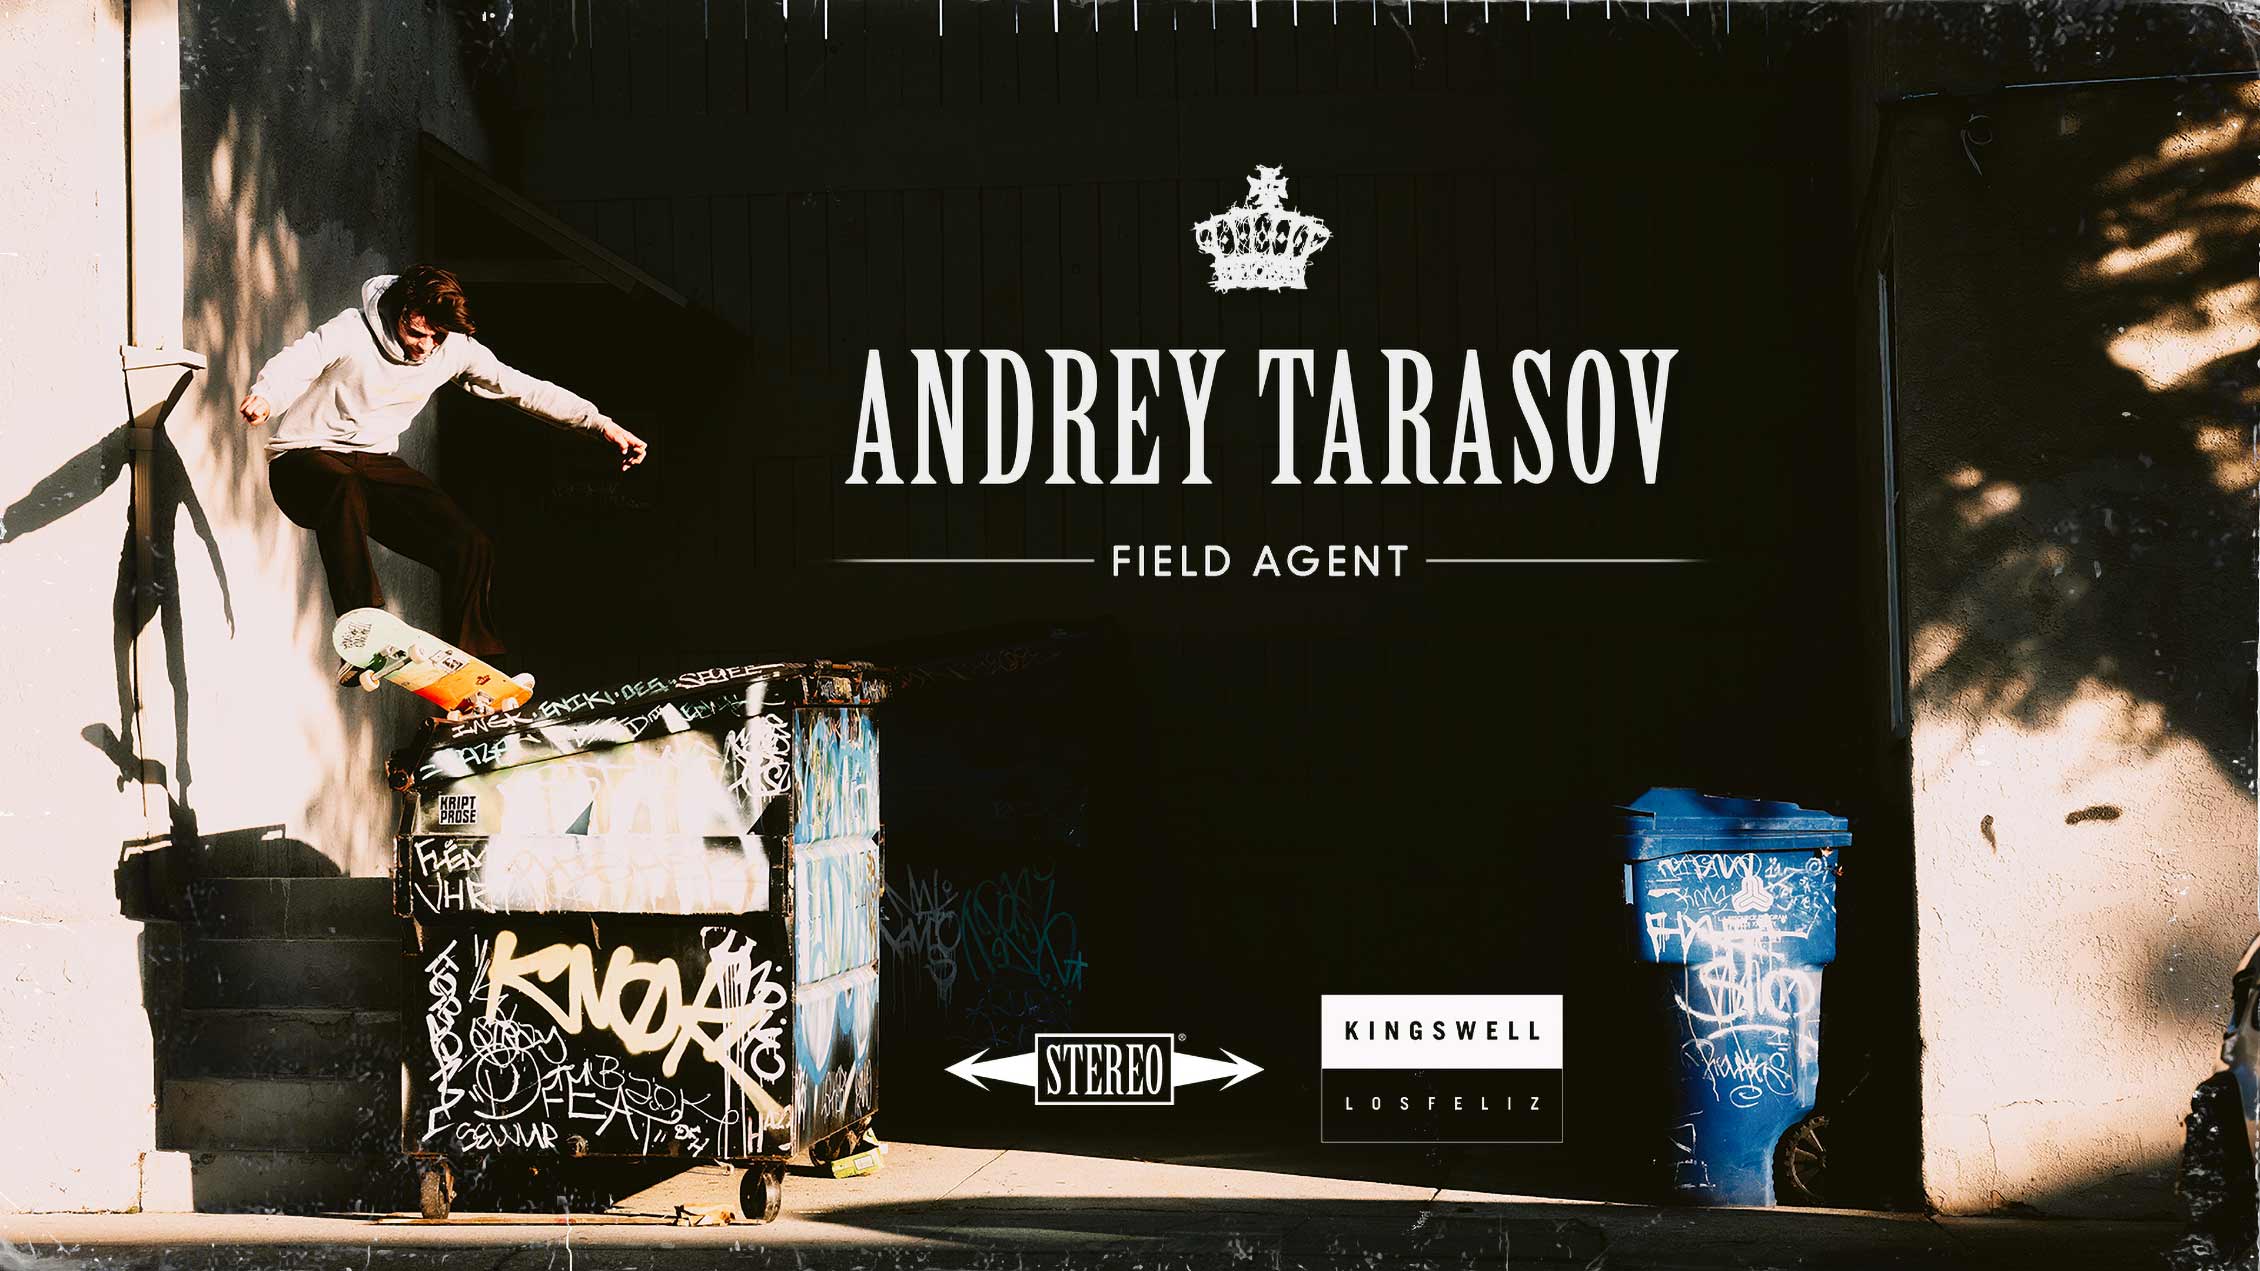 Stereo Field Agent - Andrey Tarasov